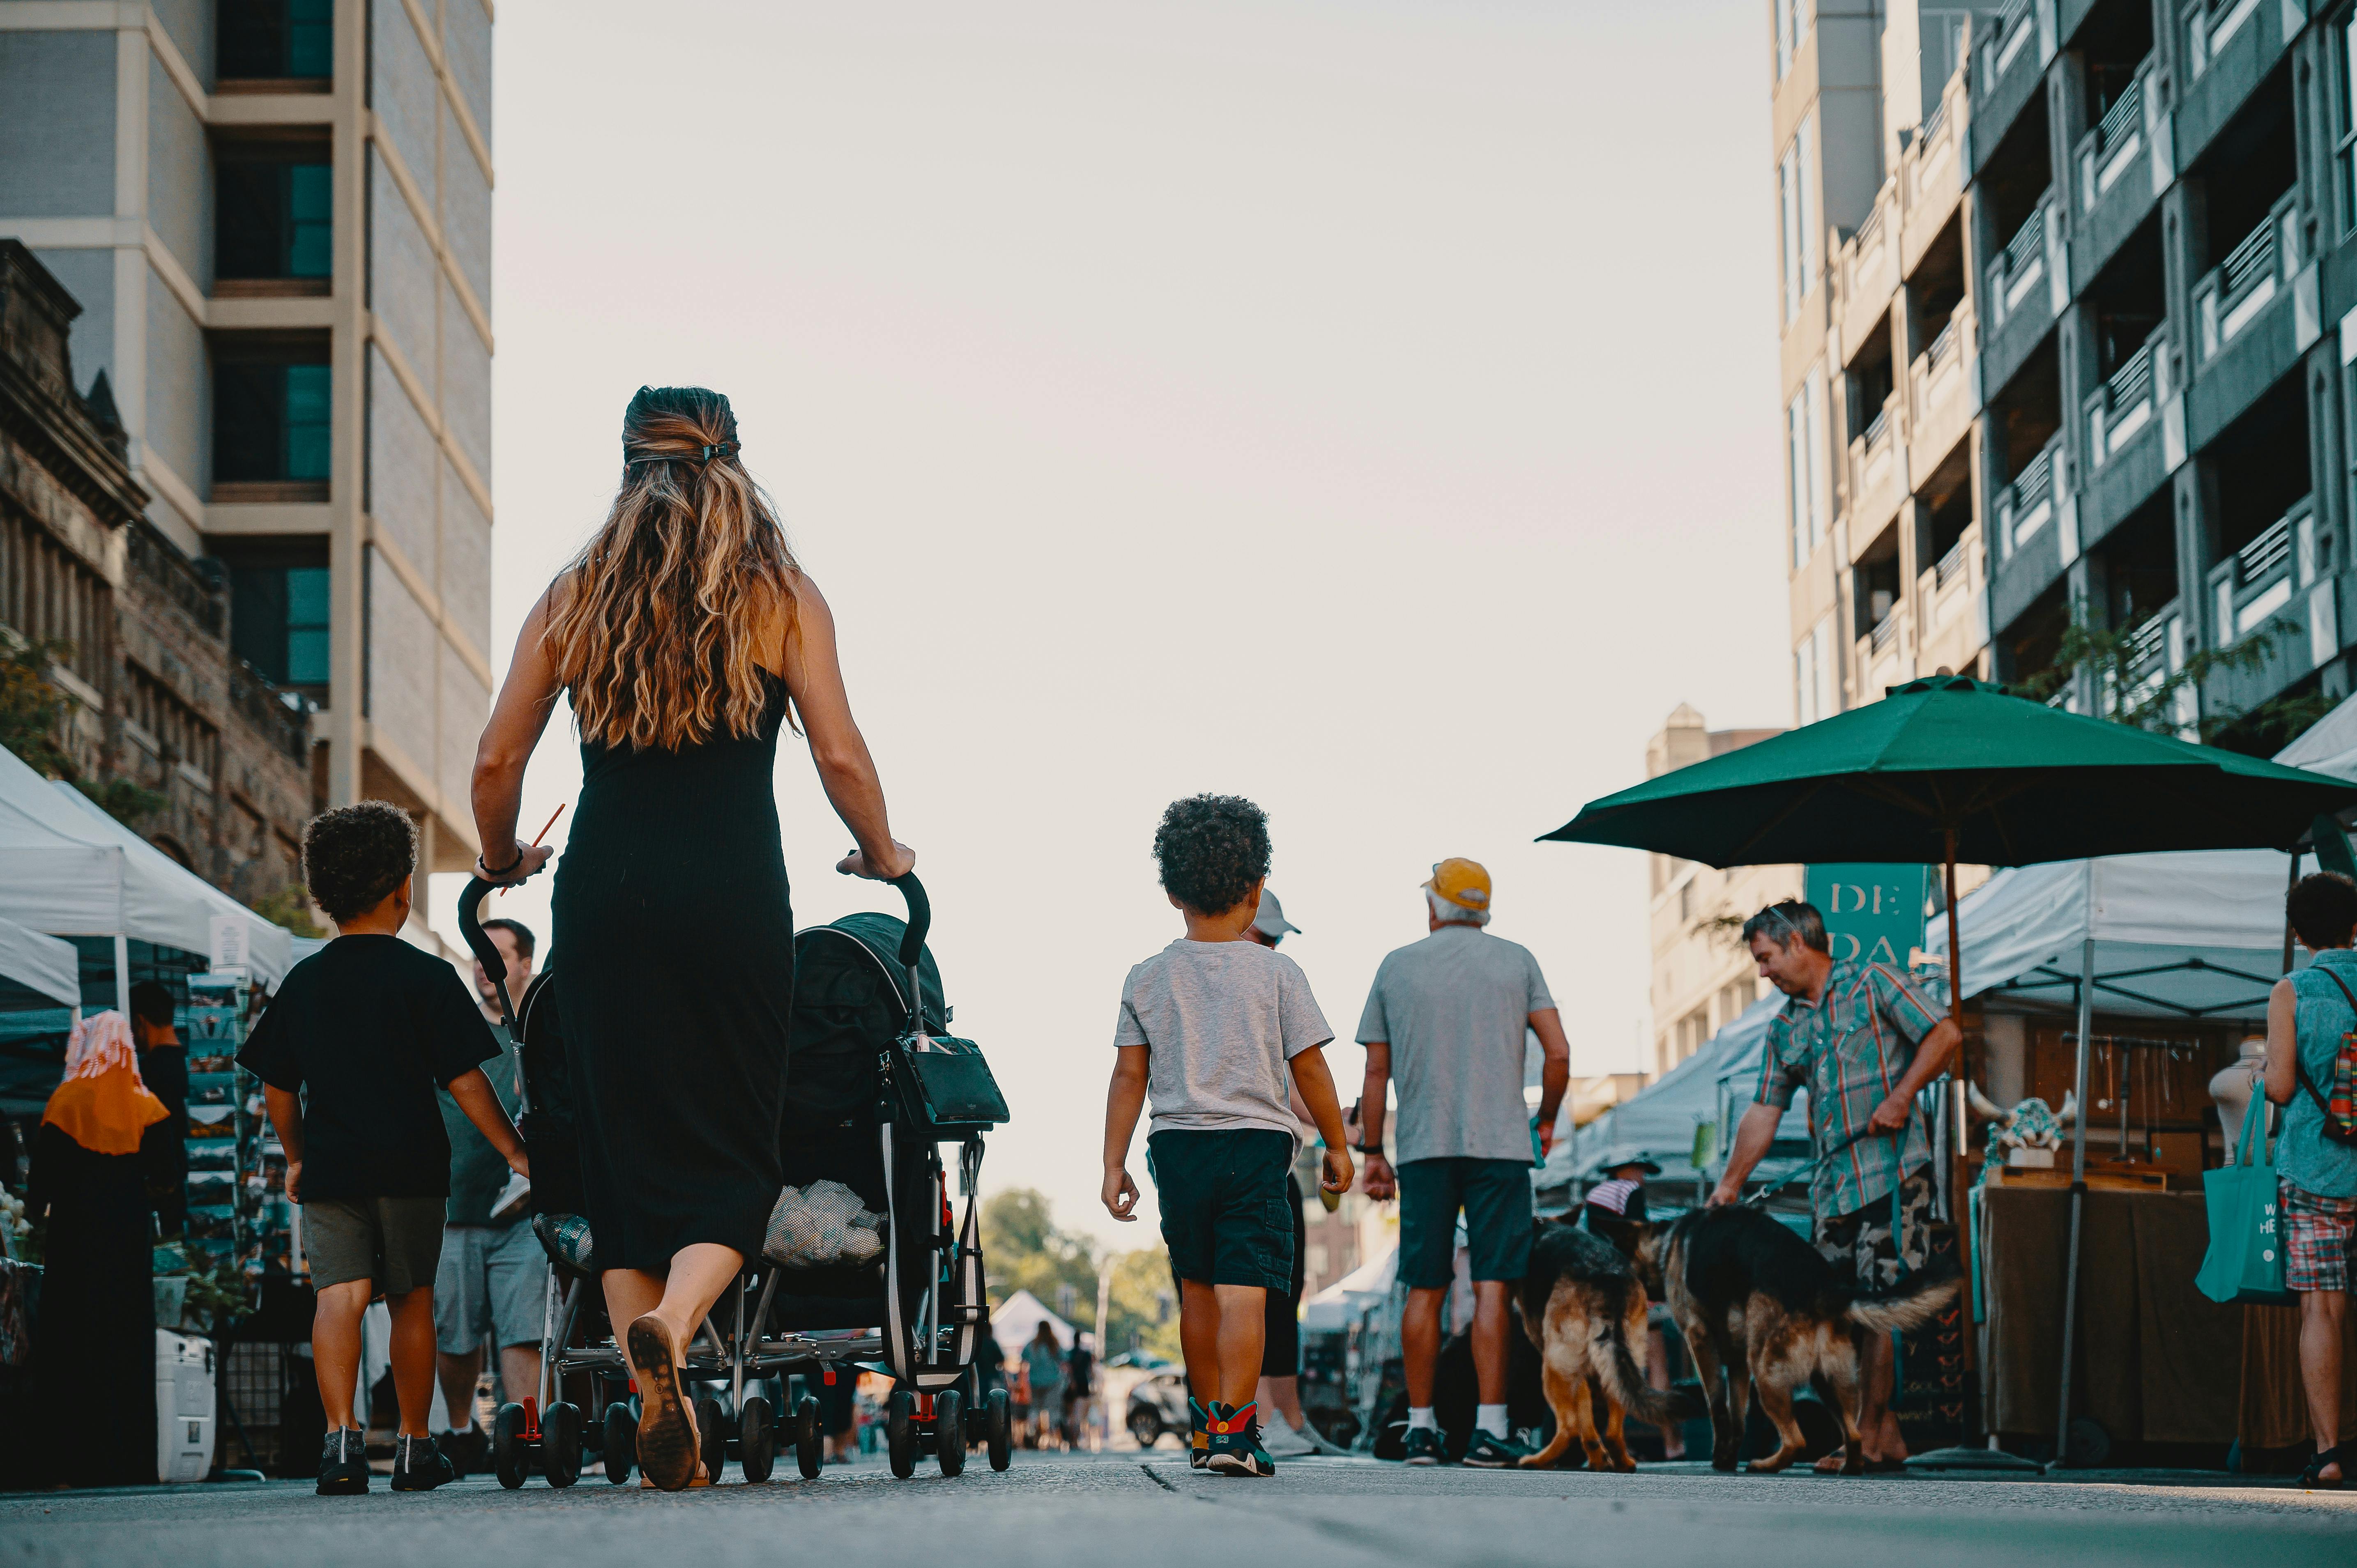 People walking on the streets | Source: Pexels